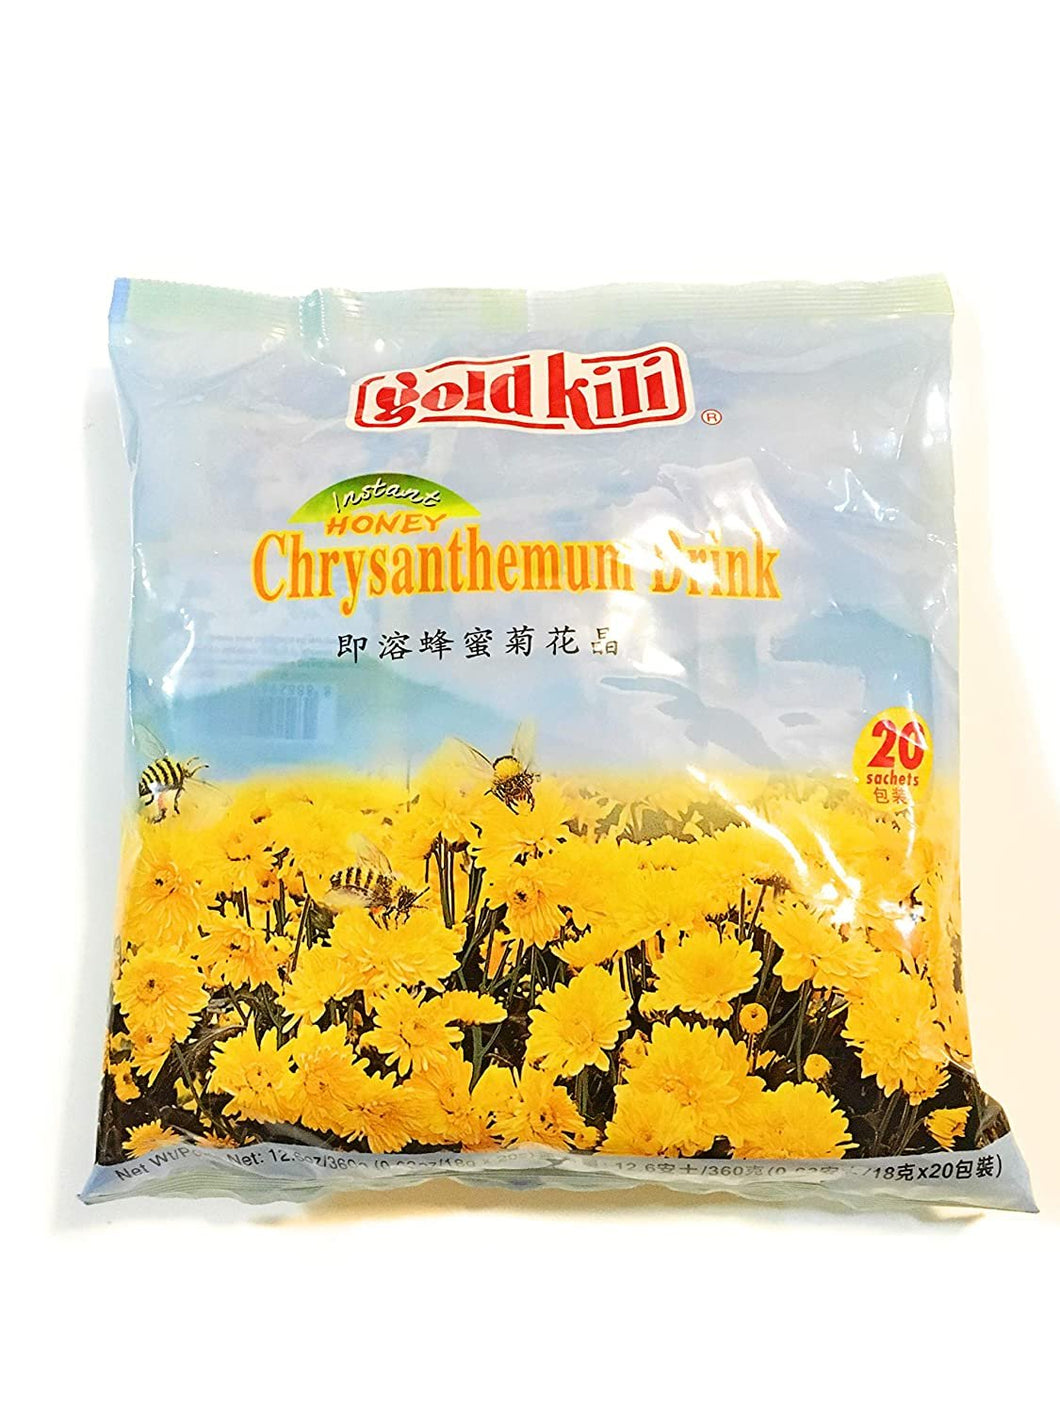 Gold Kili Honey Chrysanthemum Drink (0.63 Oz x 20s)